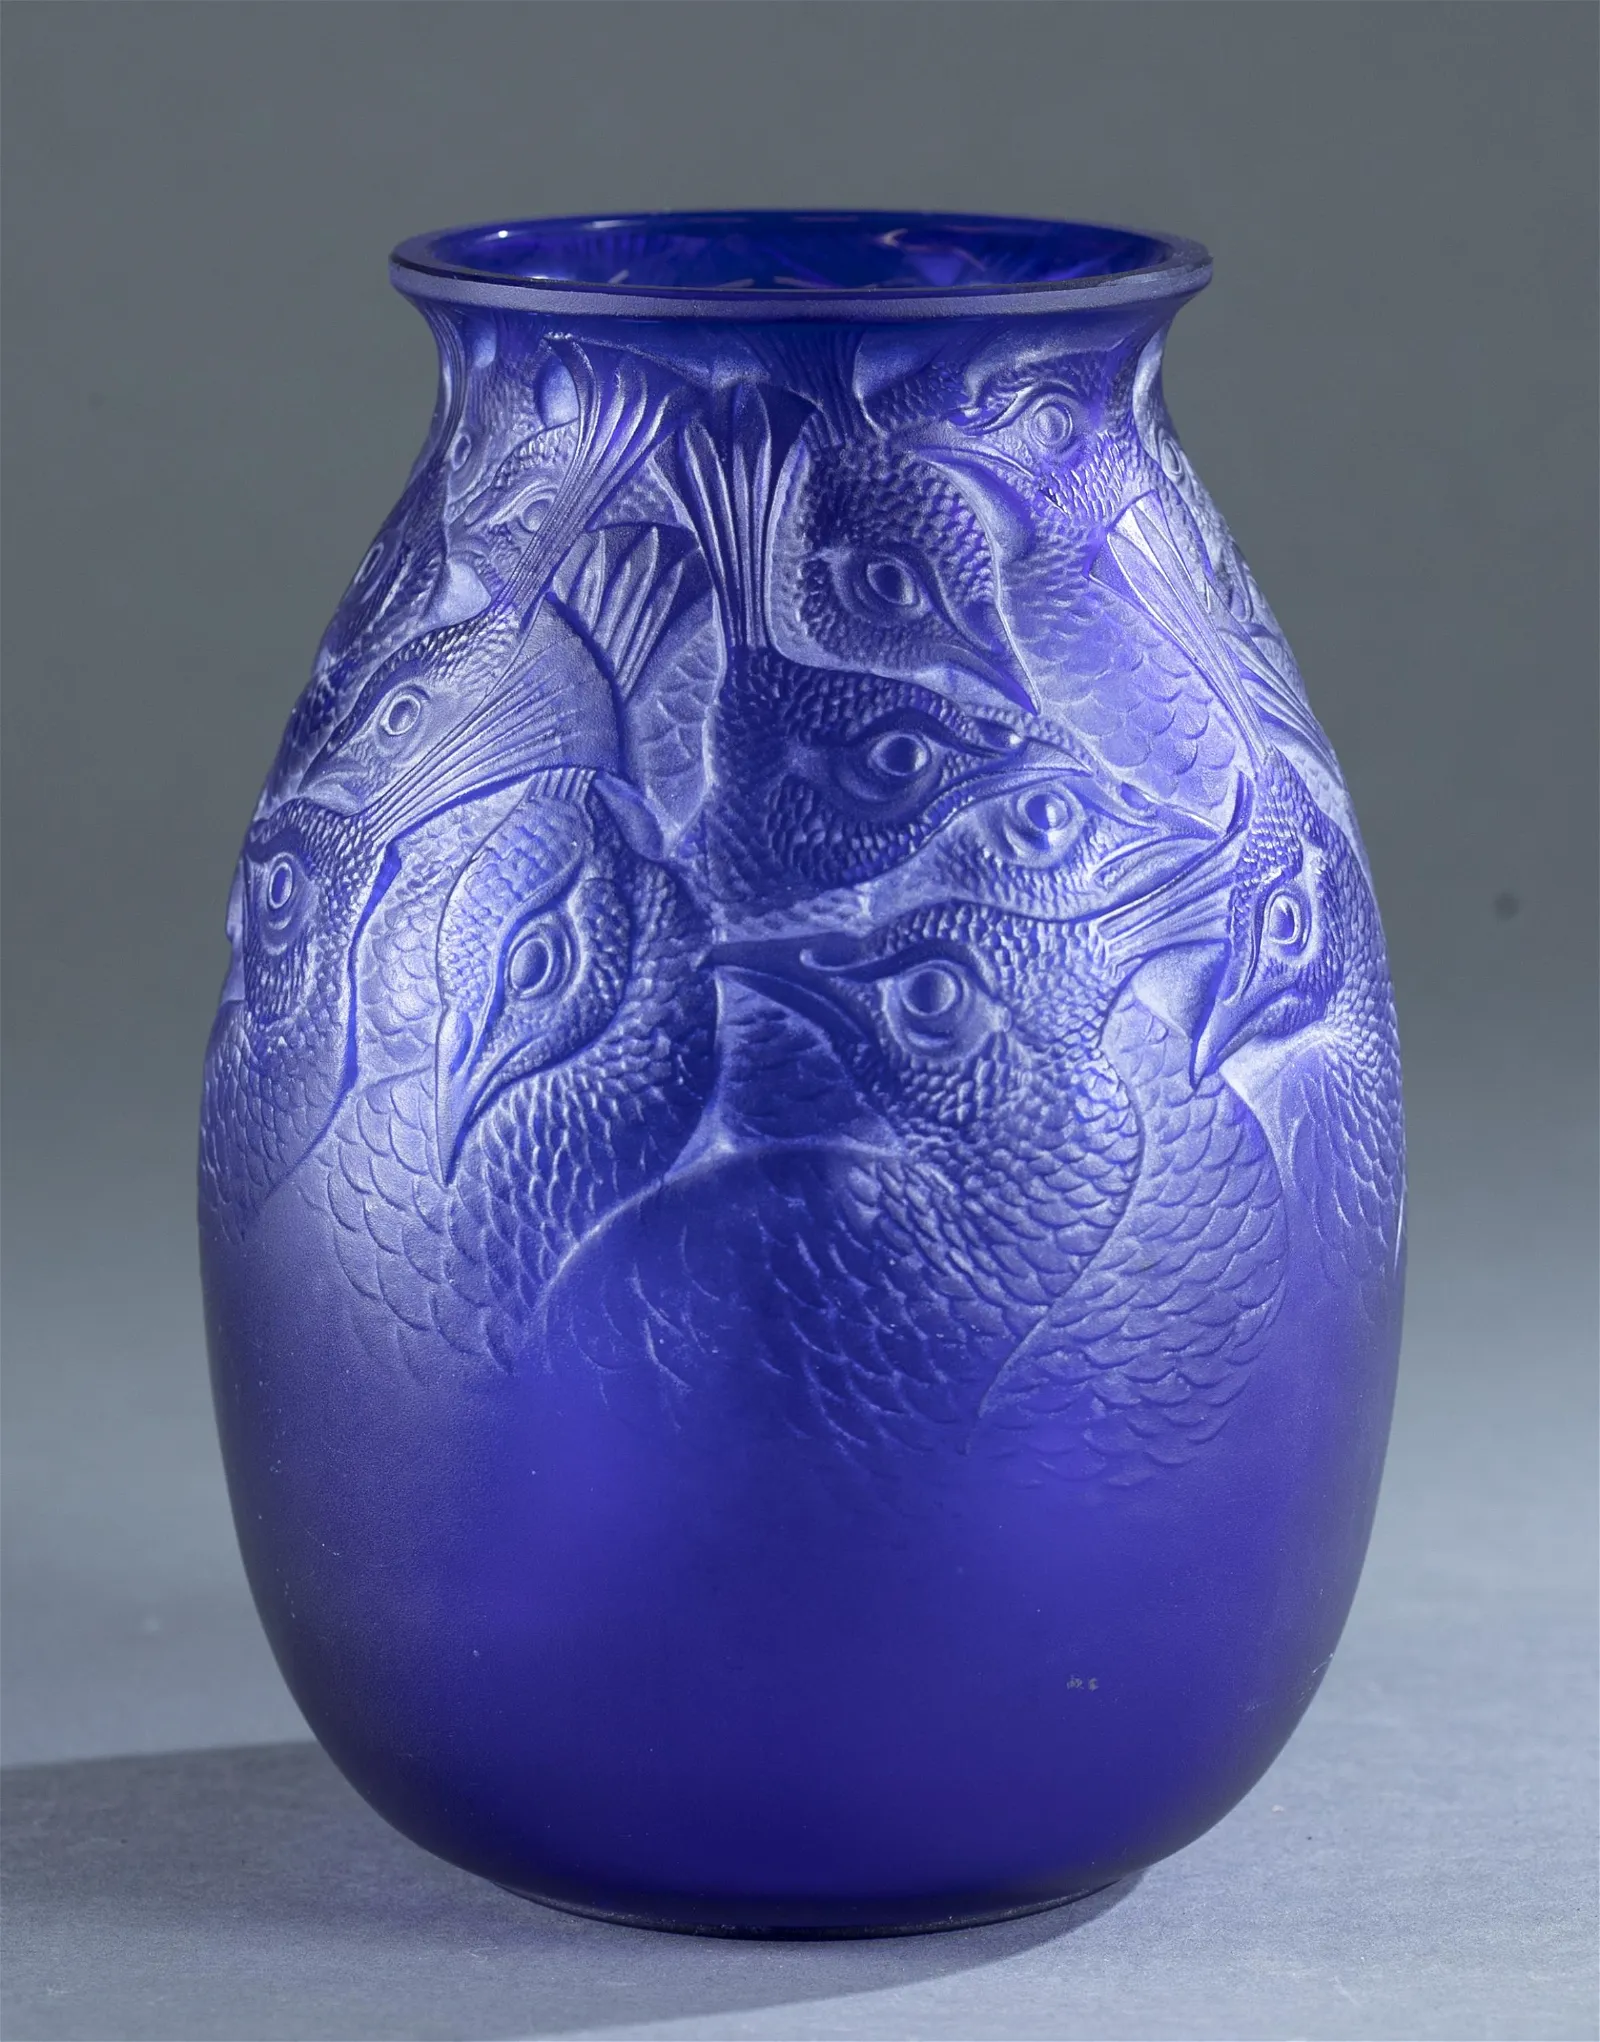 Rene Lalique, "Borromee" glass vase.